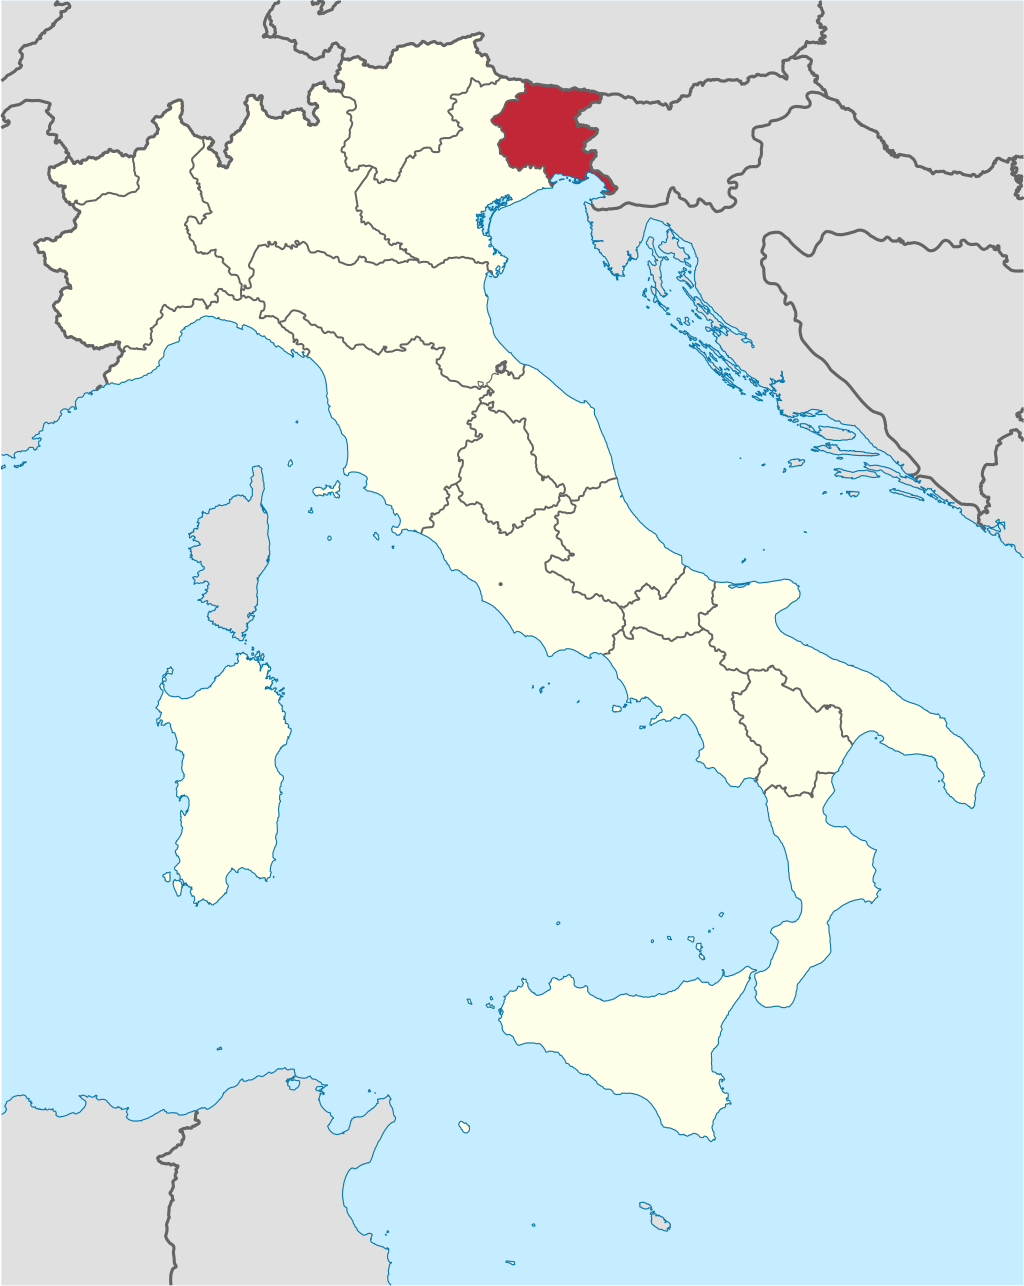 Church Hands Of Go Urbex locatie in of rond de regio Friuli-Venezia Giulia (Province of Udine), Italy